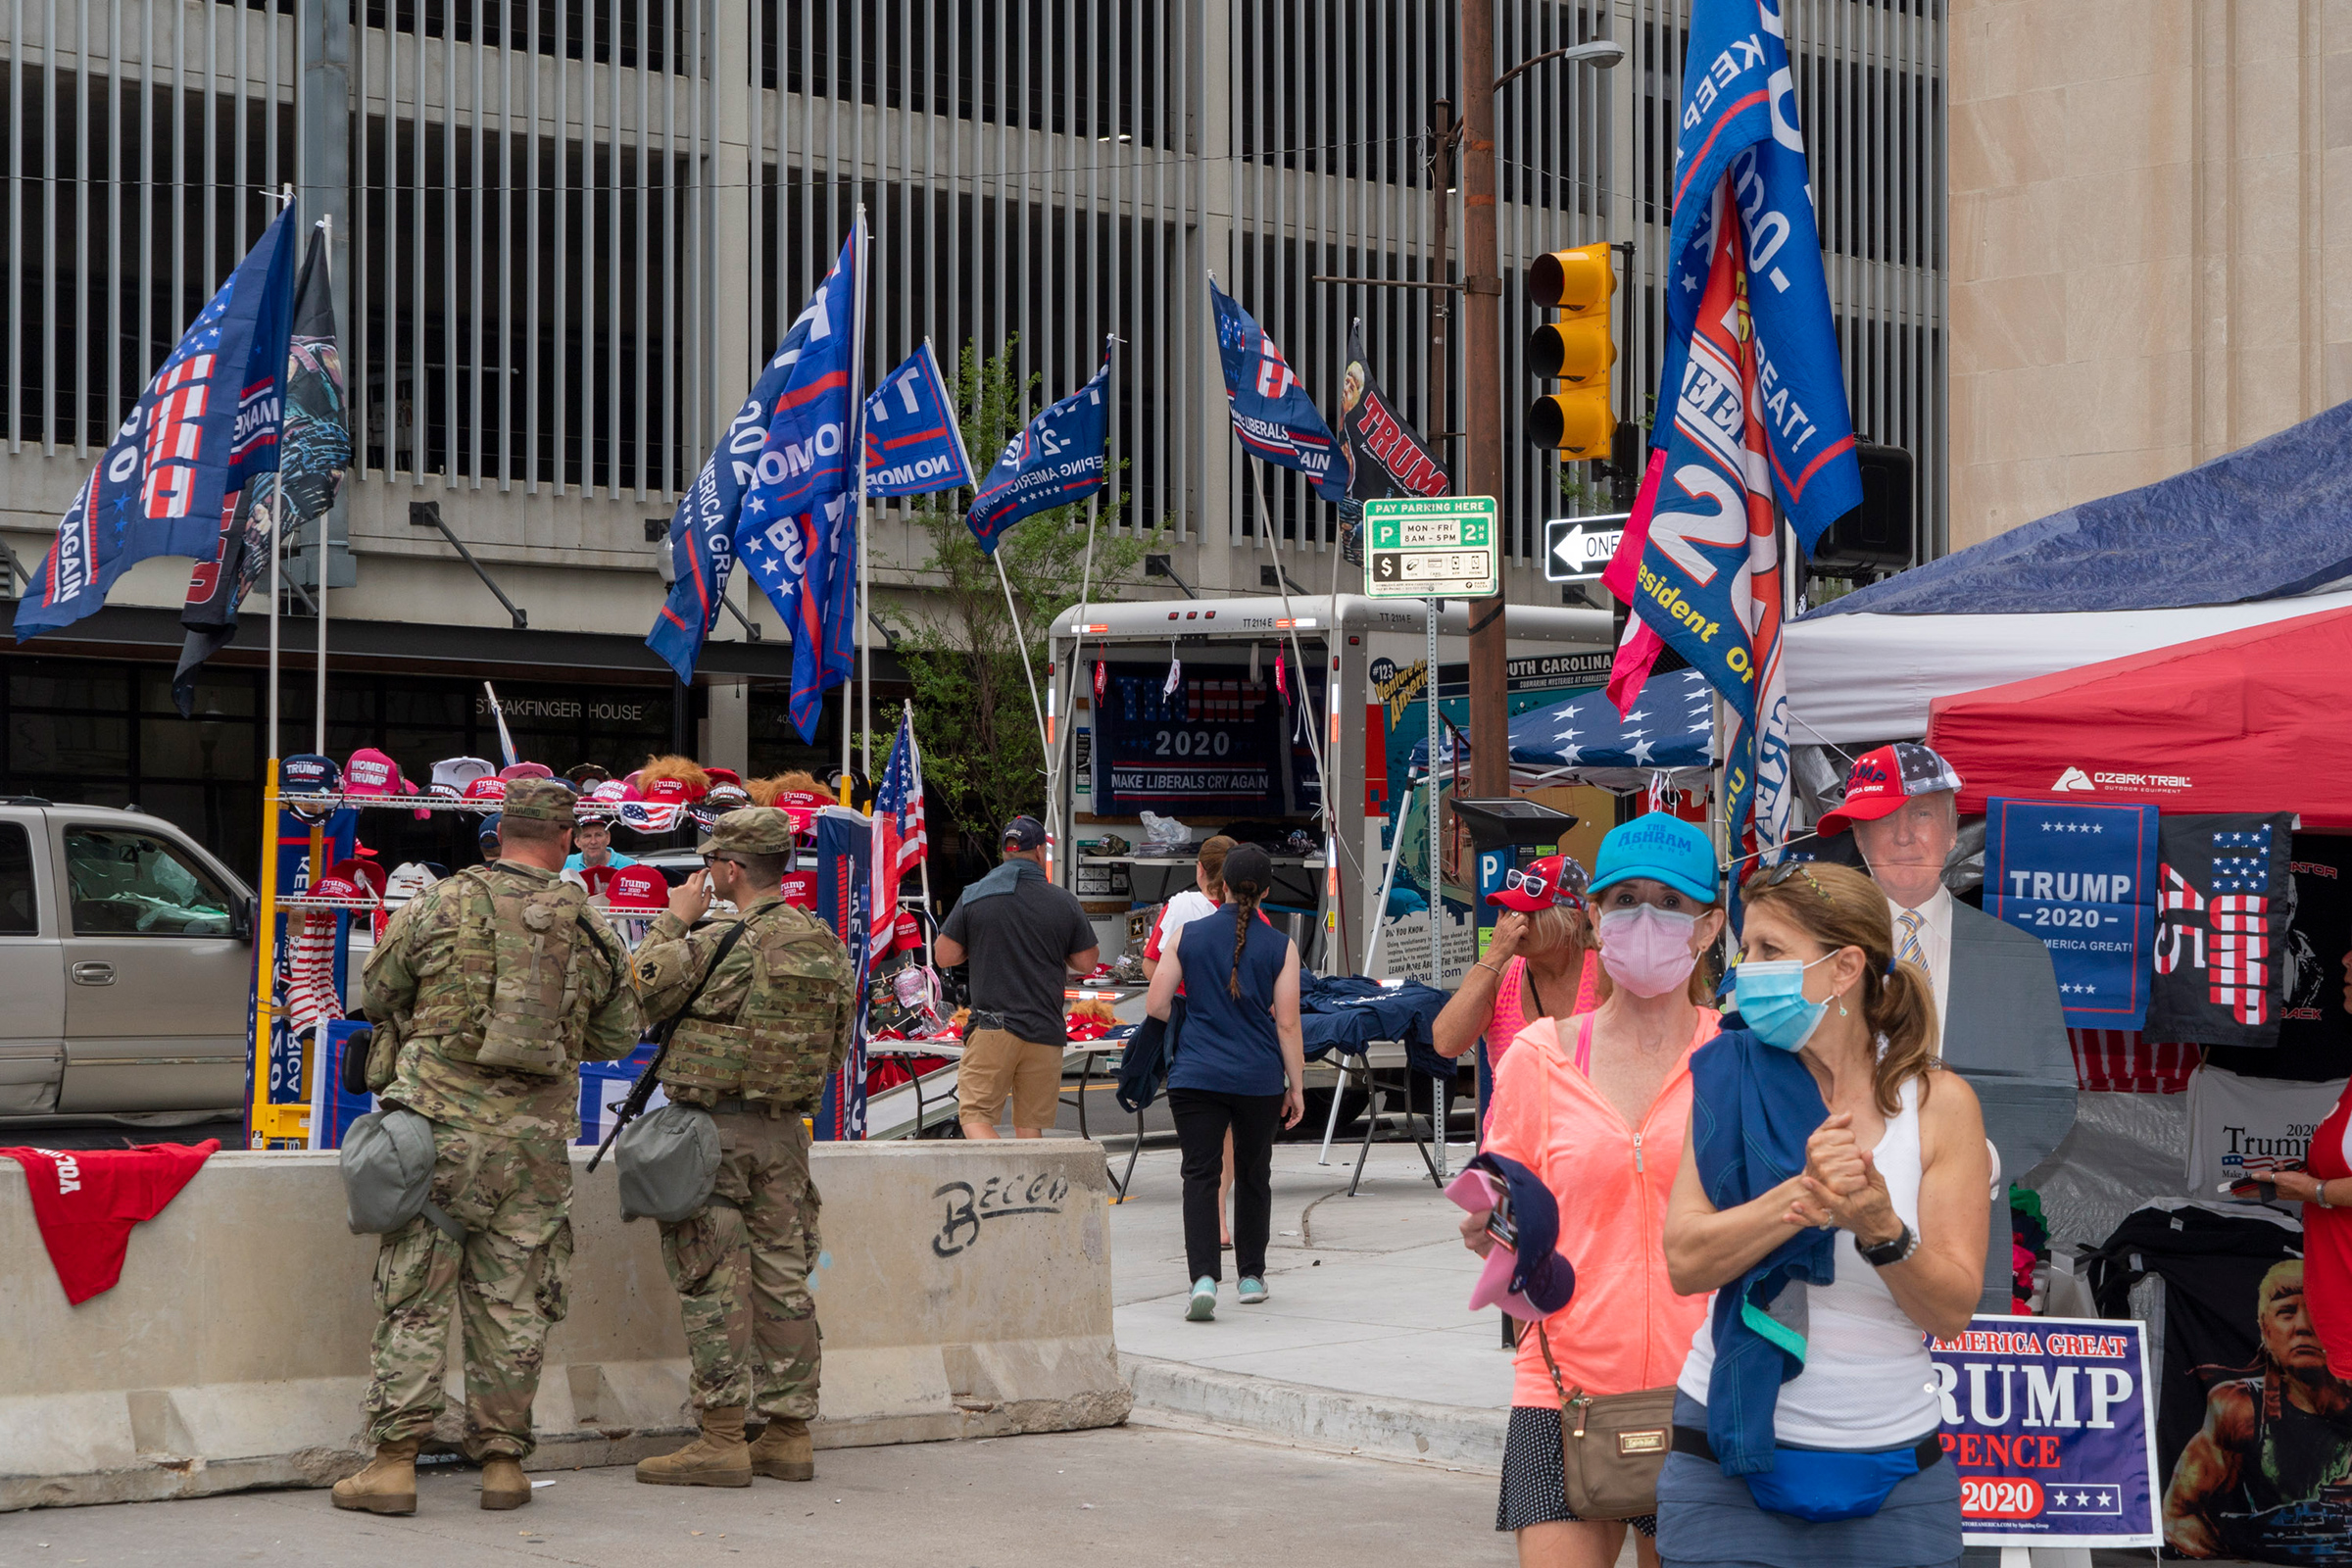 2020. Tulsa, Oklahoma. USA. National Guard and vendors selling Trump memorabilia near an entrance to the Trump rally.